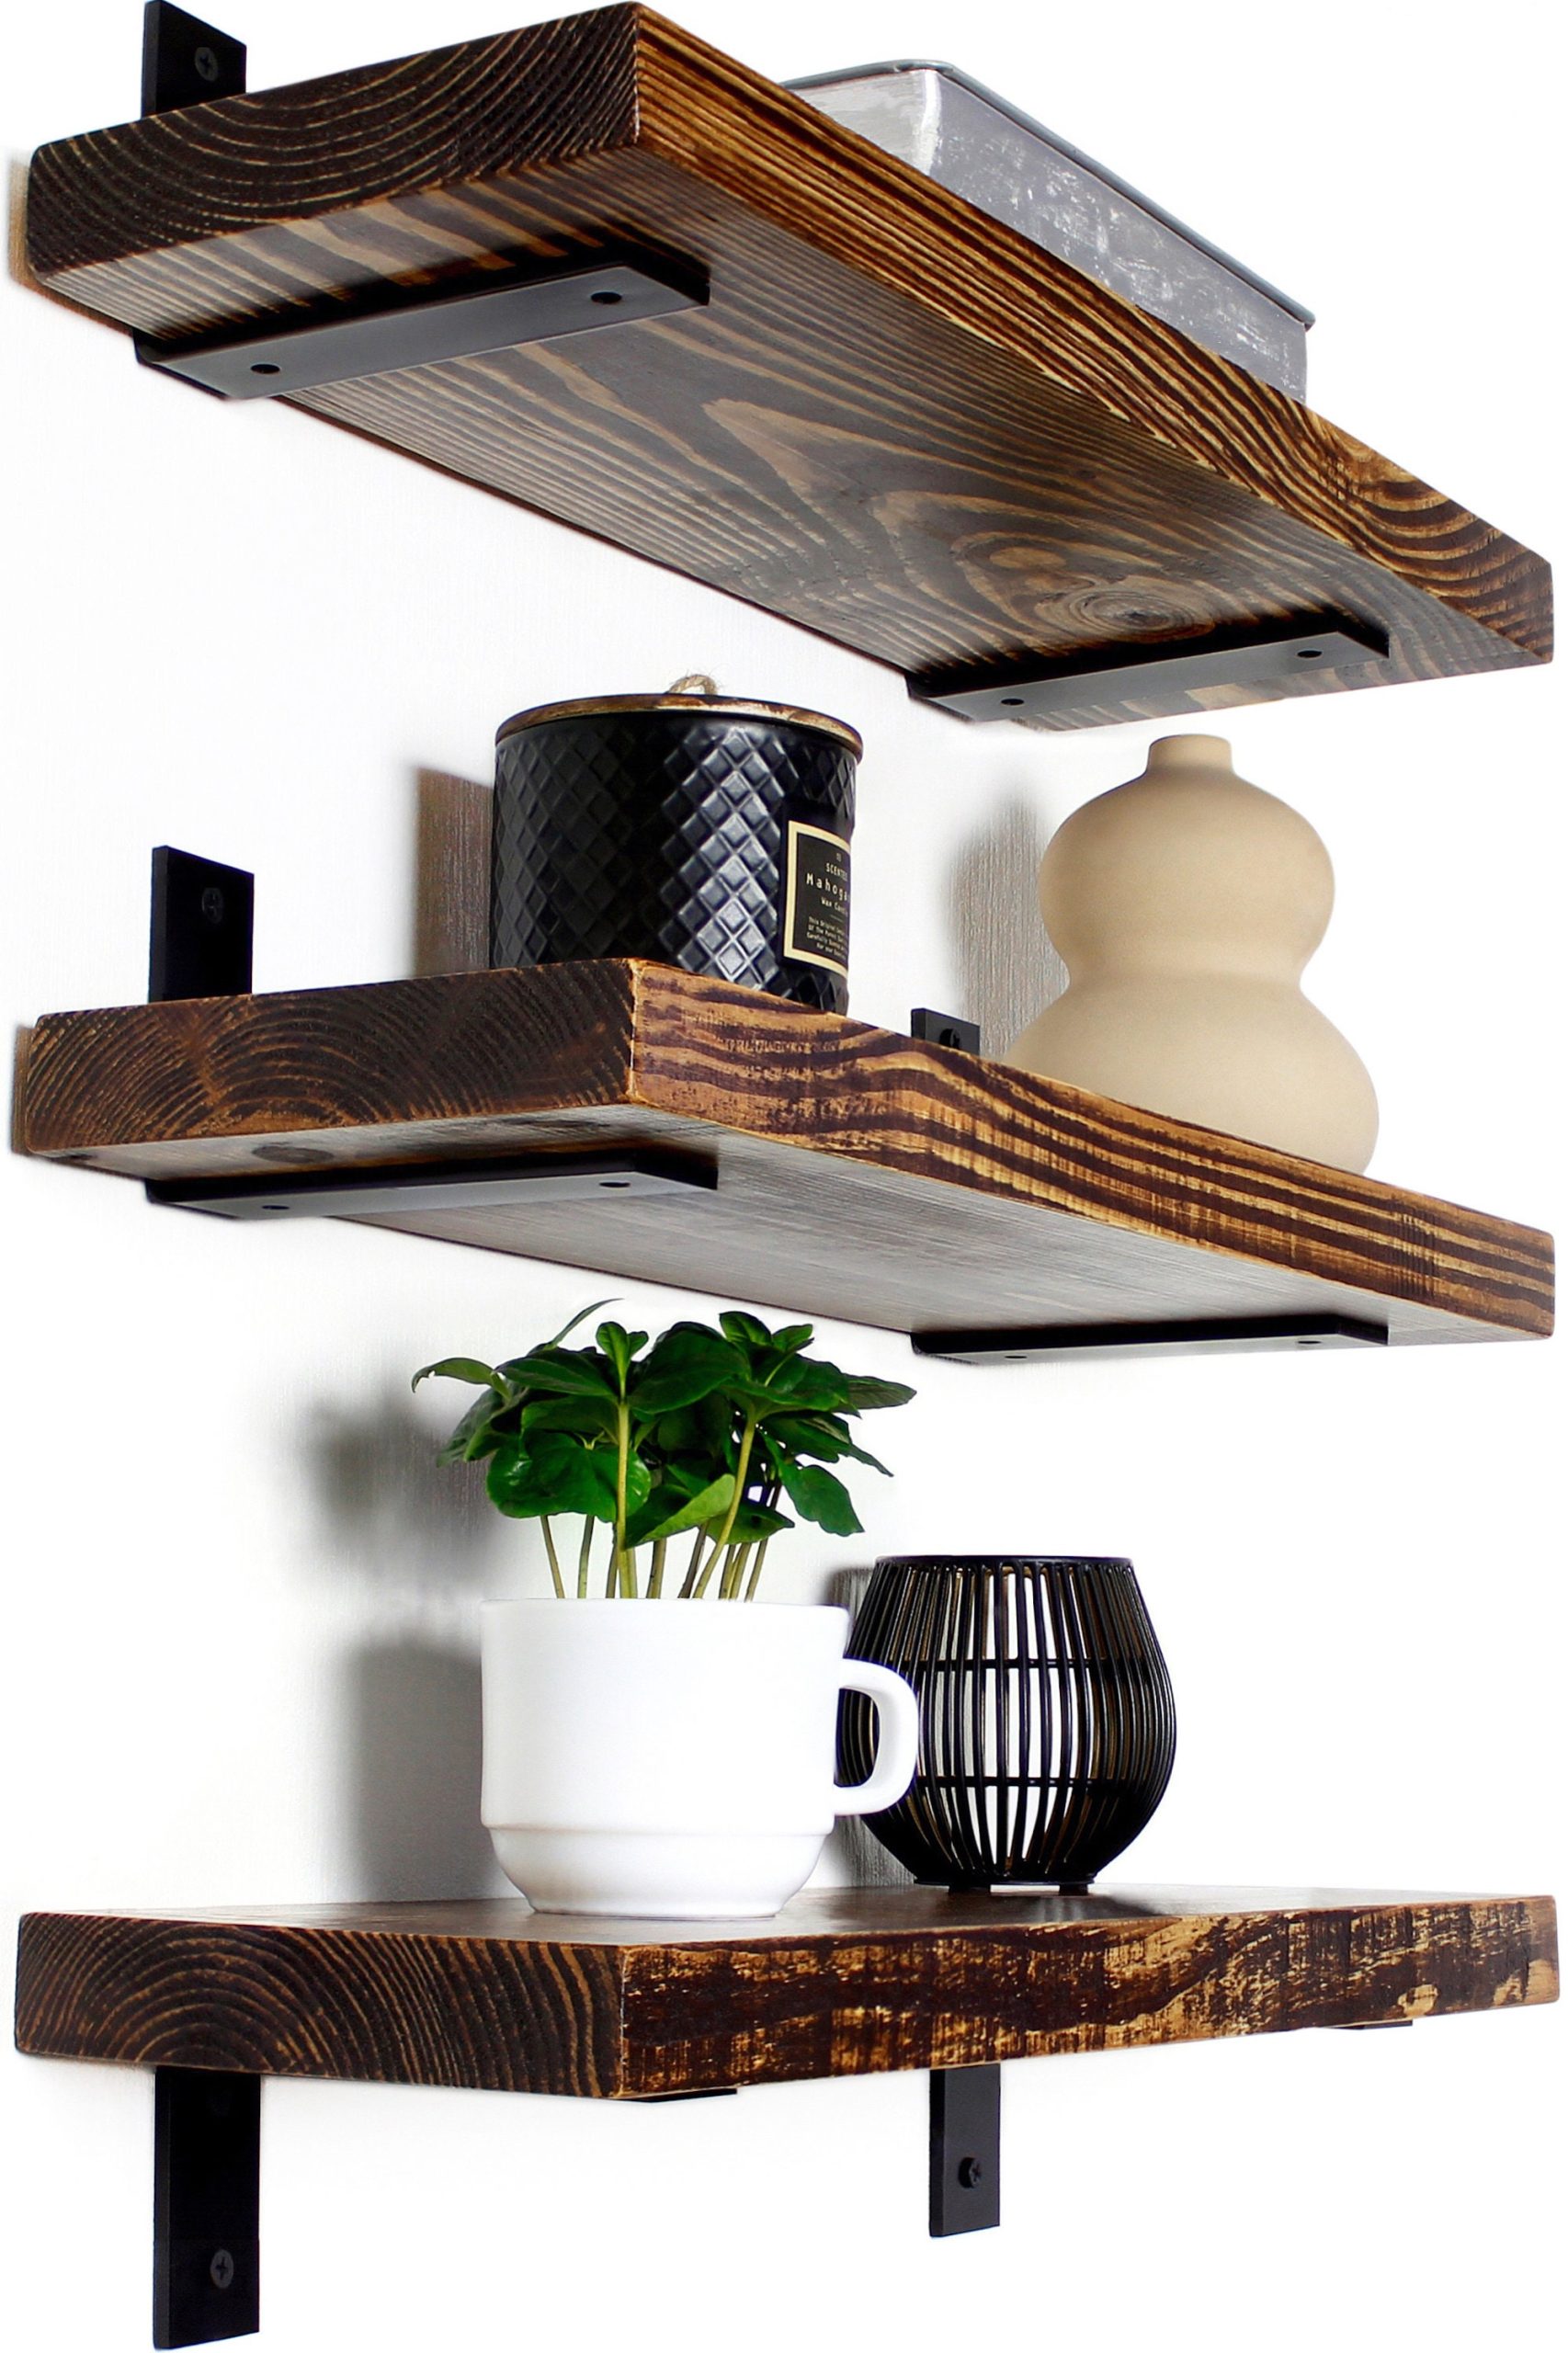 Trendy Floating Shelves For Decorative Displays